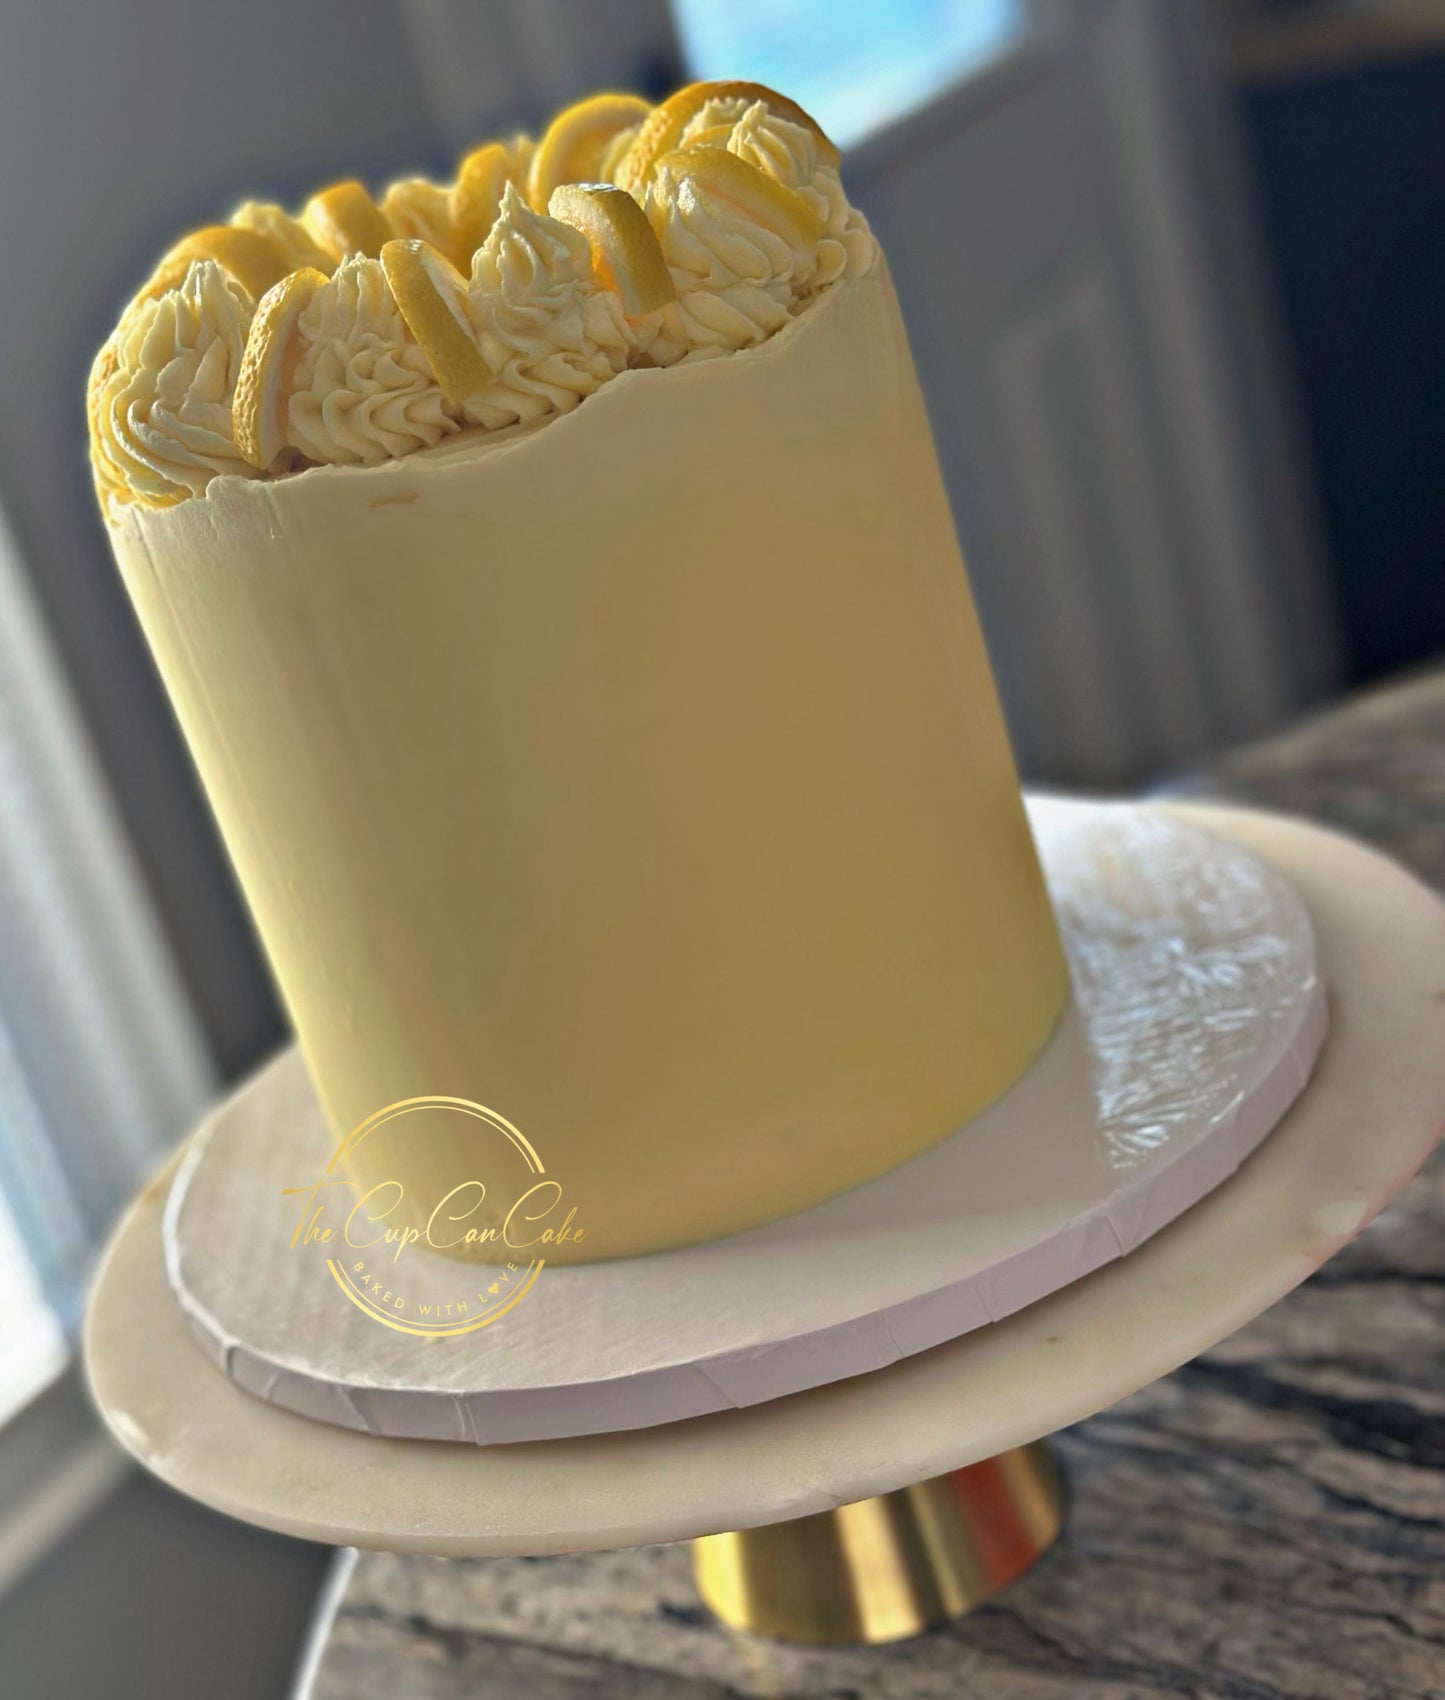 Dessert-style Cakes